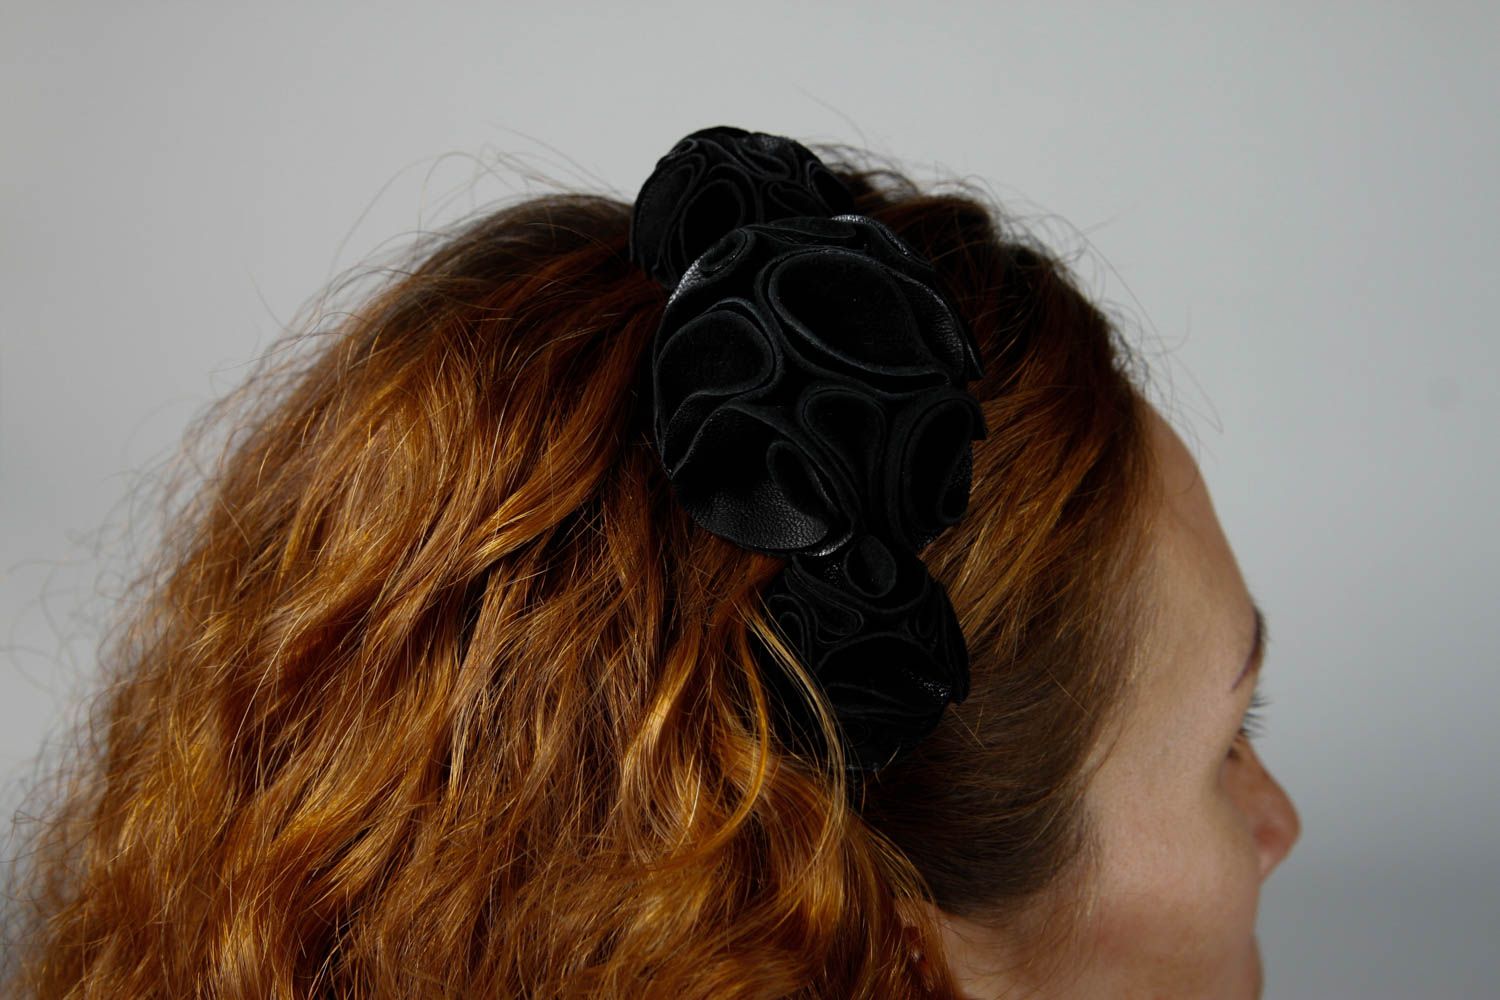 Unusual handmade flower headband leather goods fashion accessories for girls photo 2